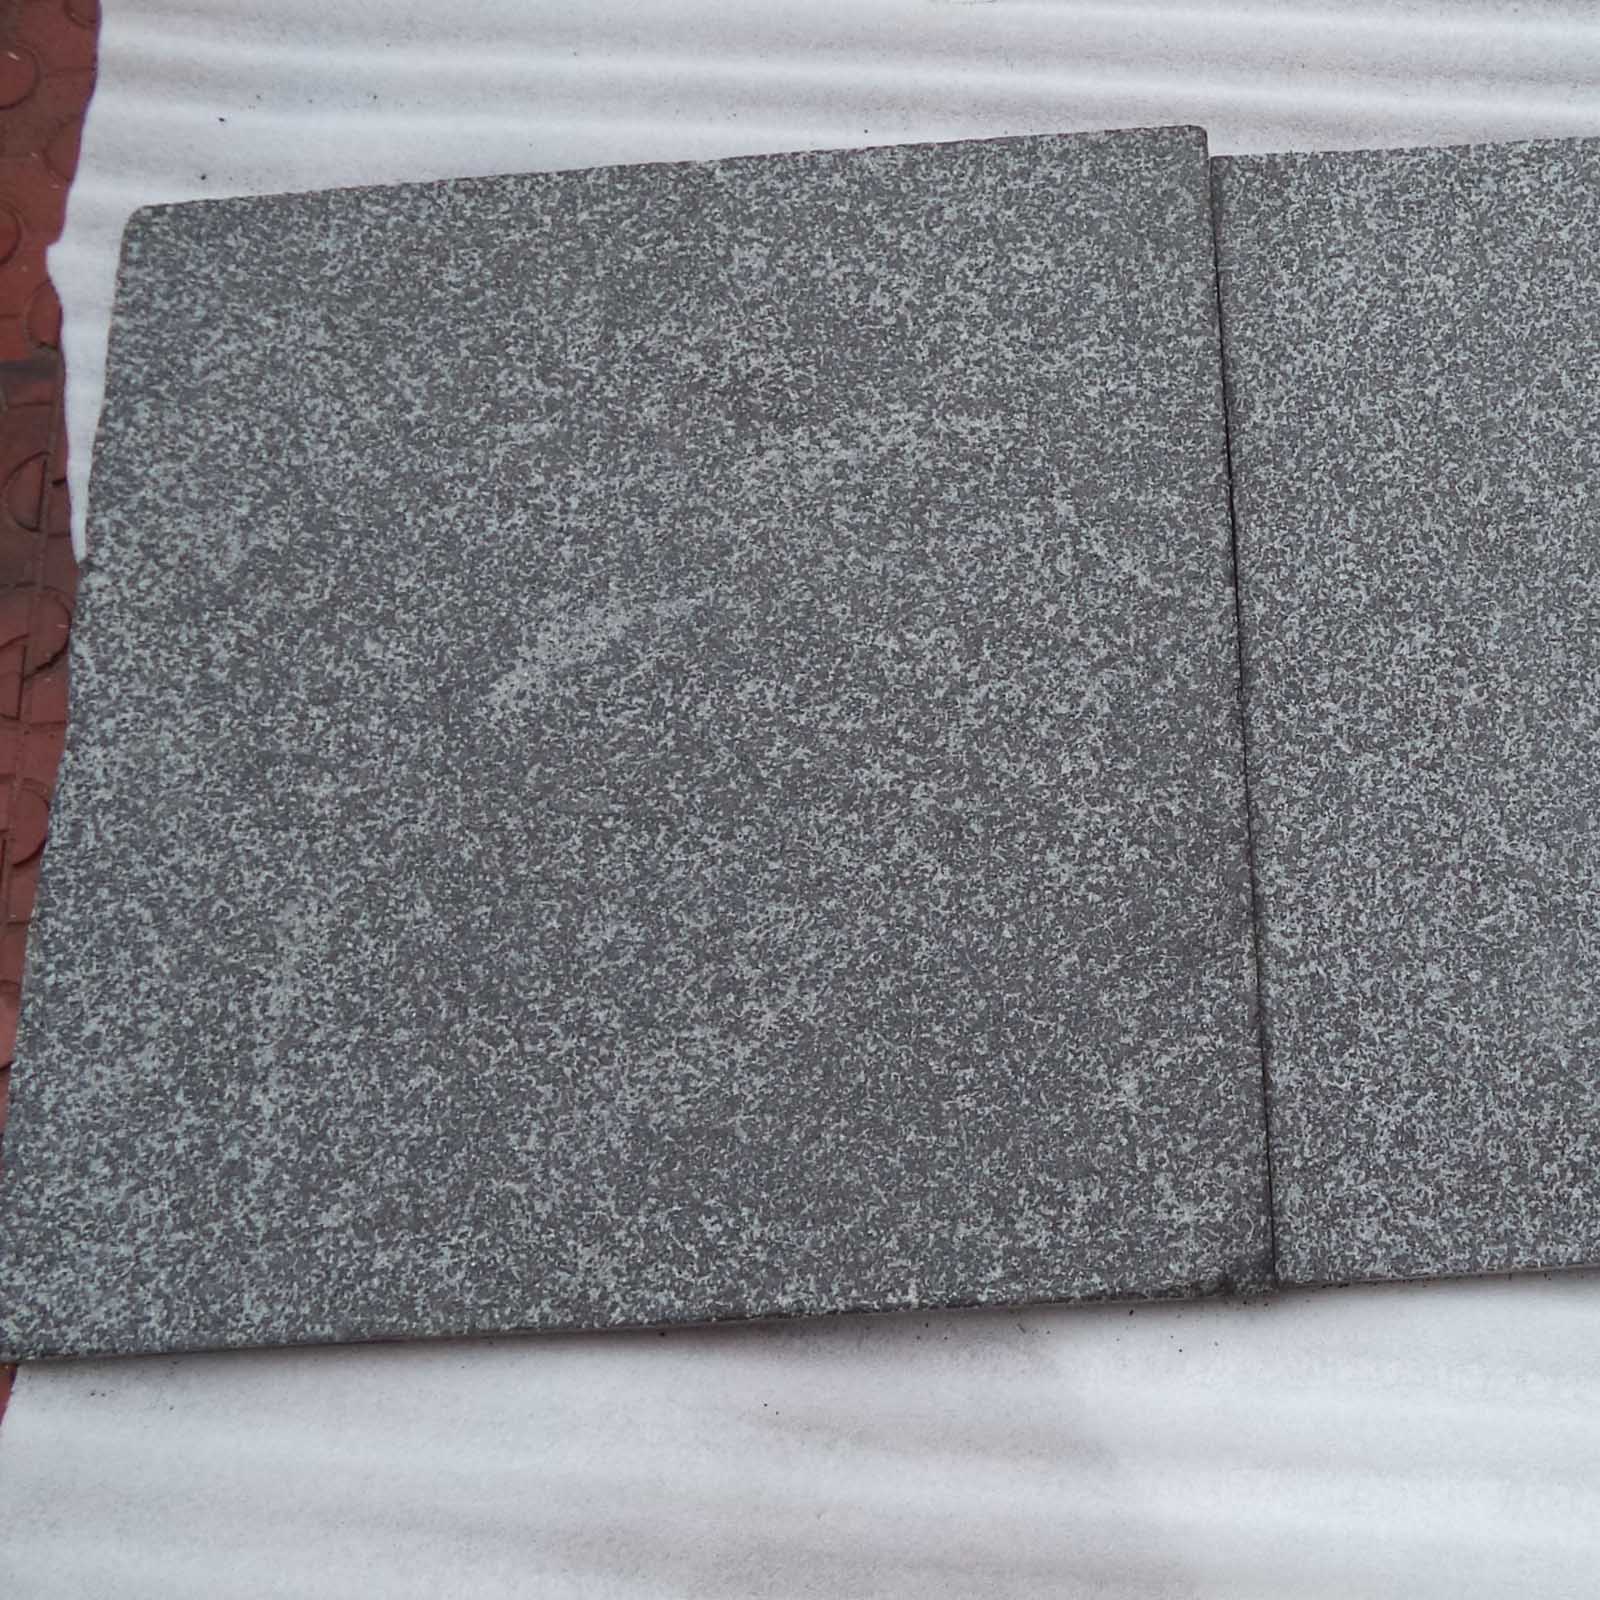 Impala Black Granite From Indian Granite Exporter Supplier